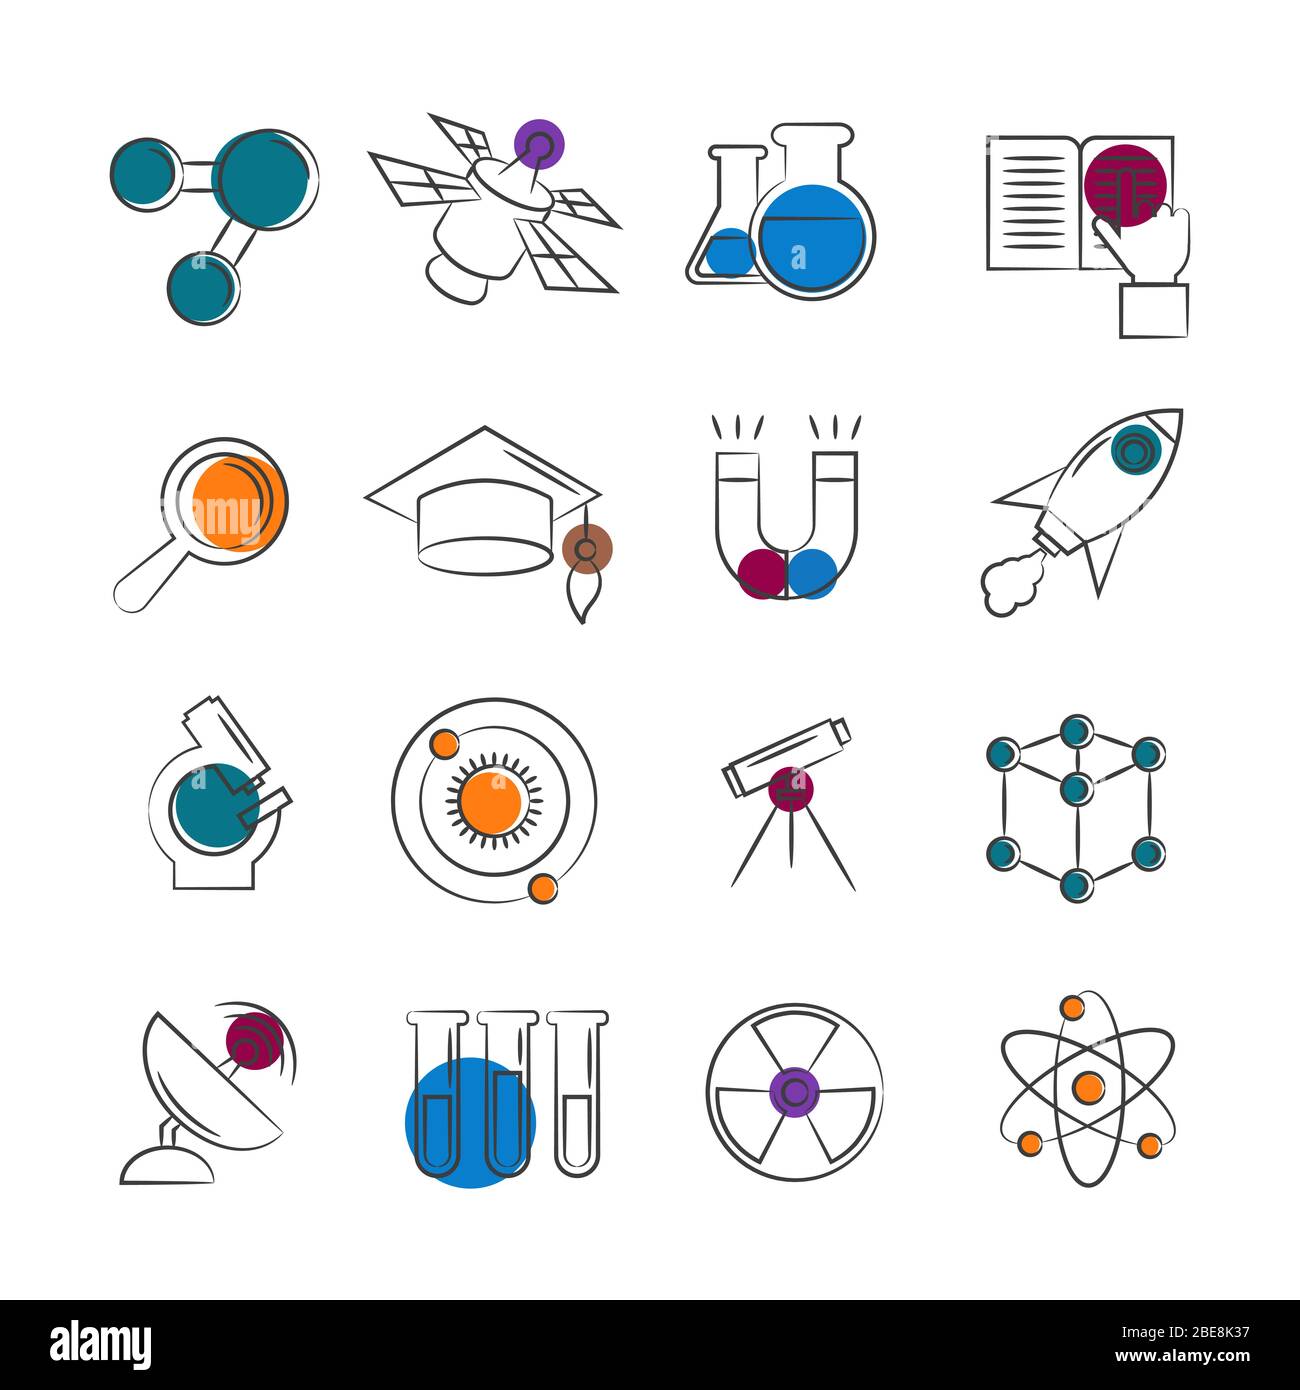 Science Line Icons Kollektion mit bunten Details. Science flache Elemente. Vektorgrafik Stock Vektor